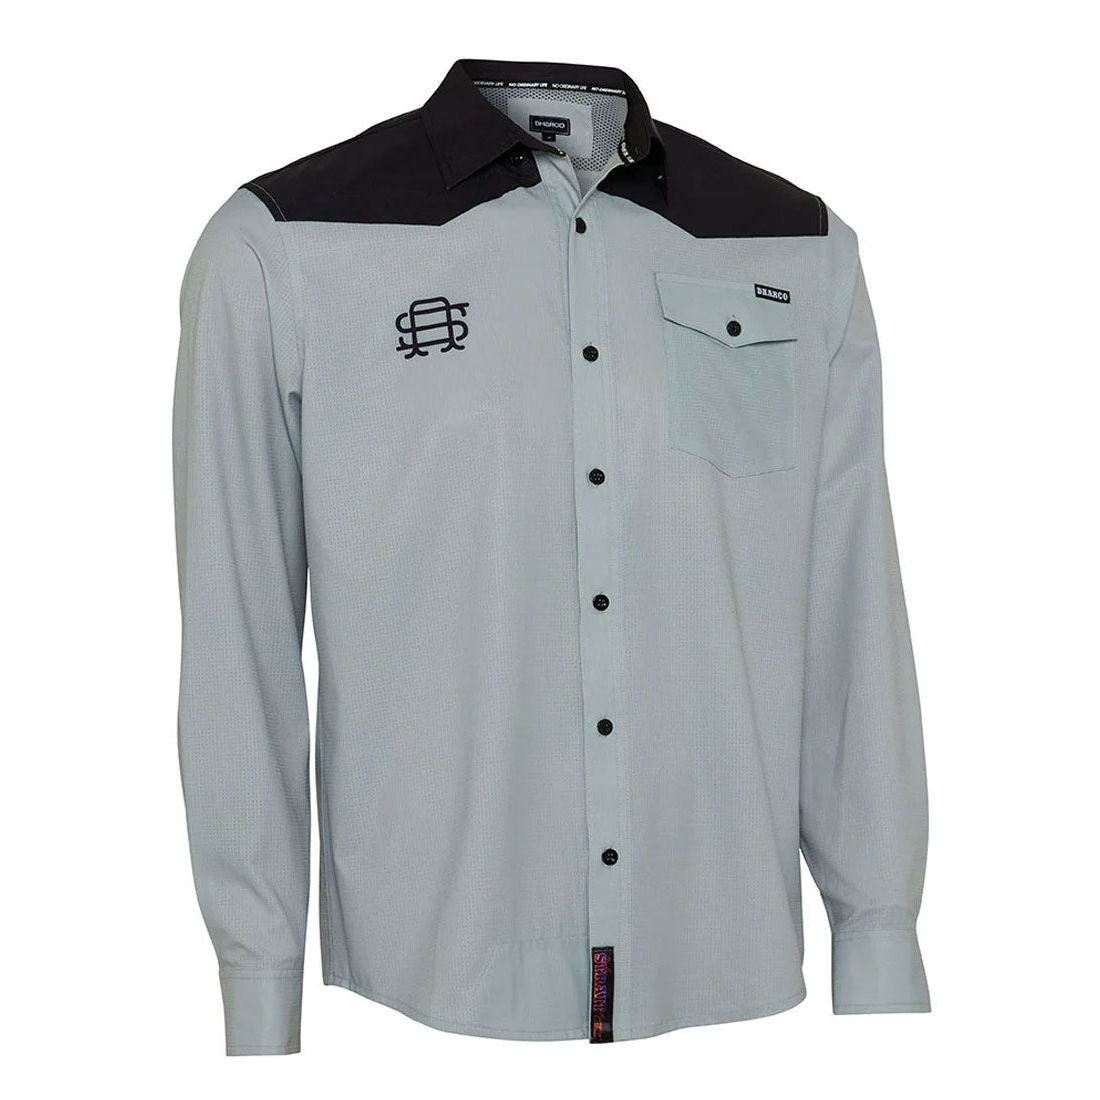 DHaRCO Men's Long Sleeve Button Up Jersey - XL - Kyle Strait Signature Edition